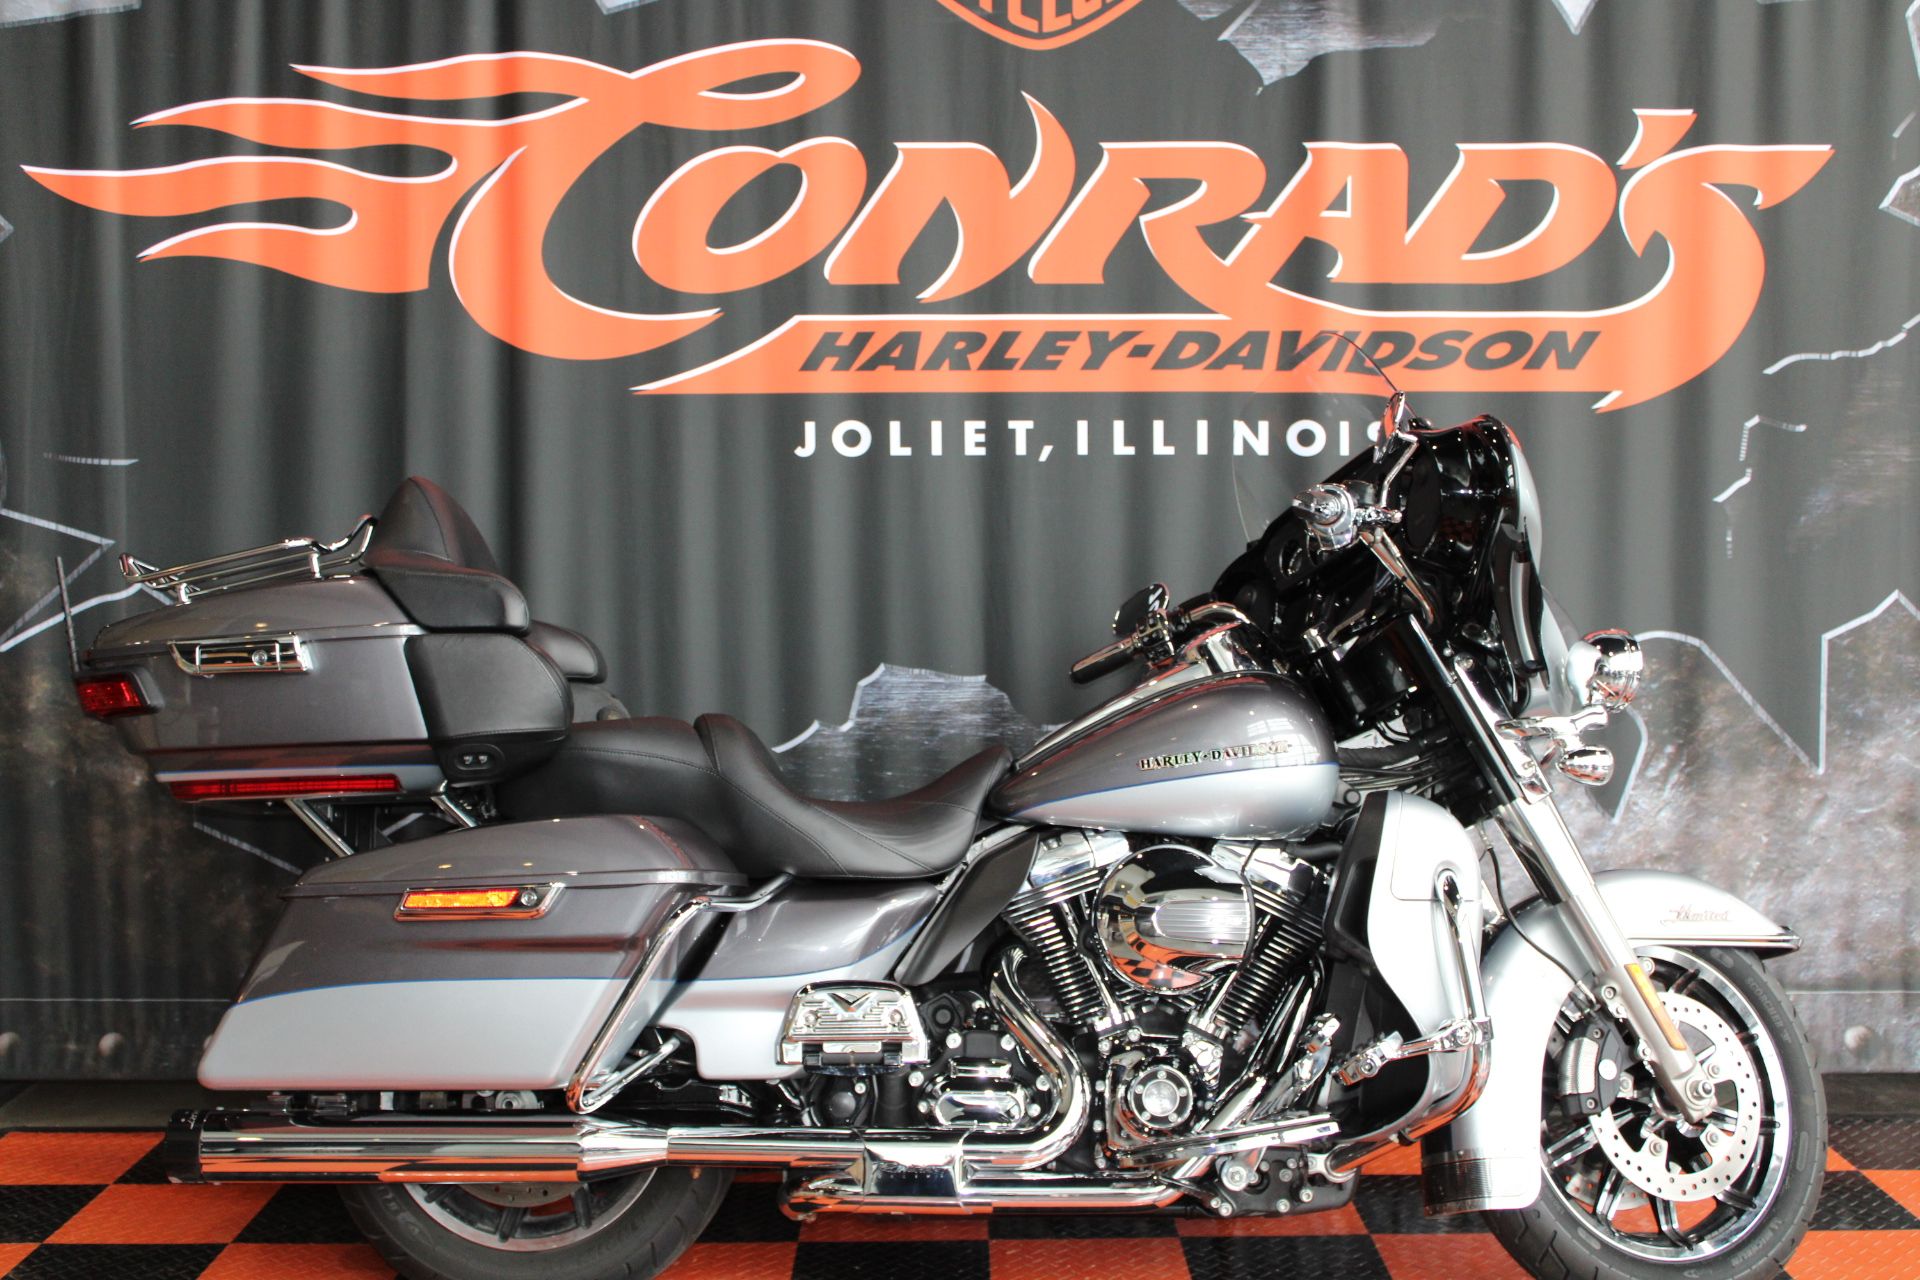 2014 Harley-Davidson Ultra Limited in Shorewood, Illinois - Photo 1